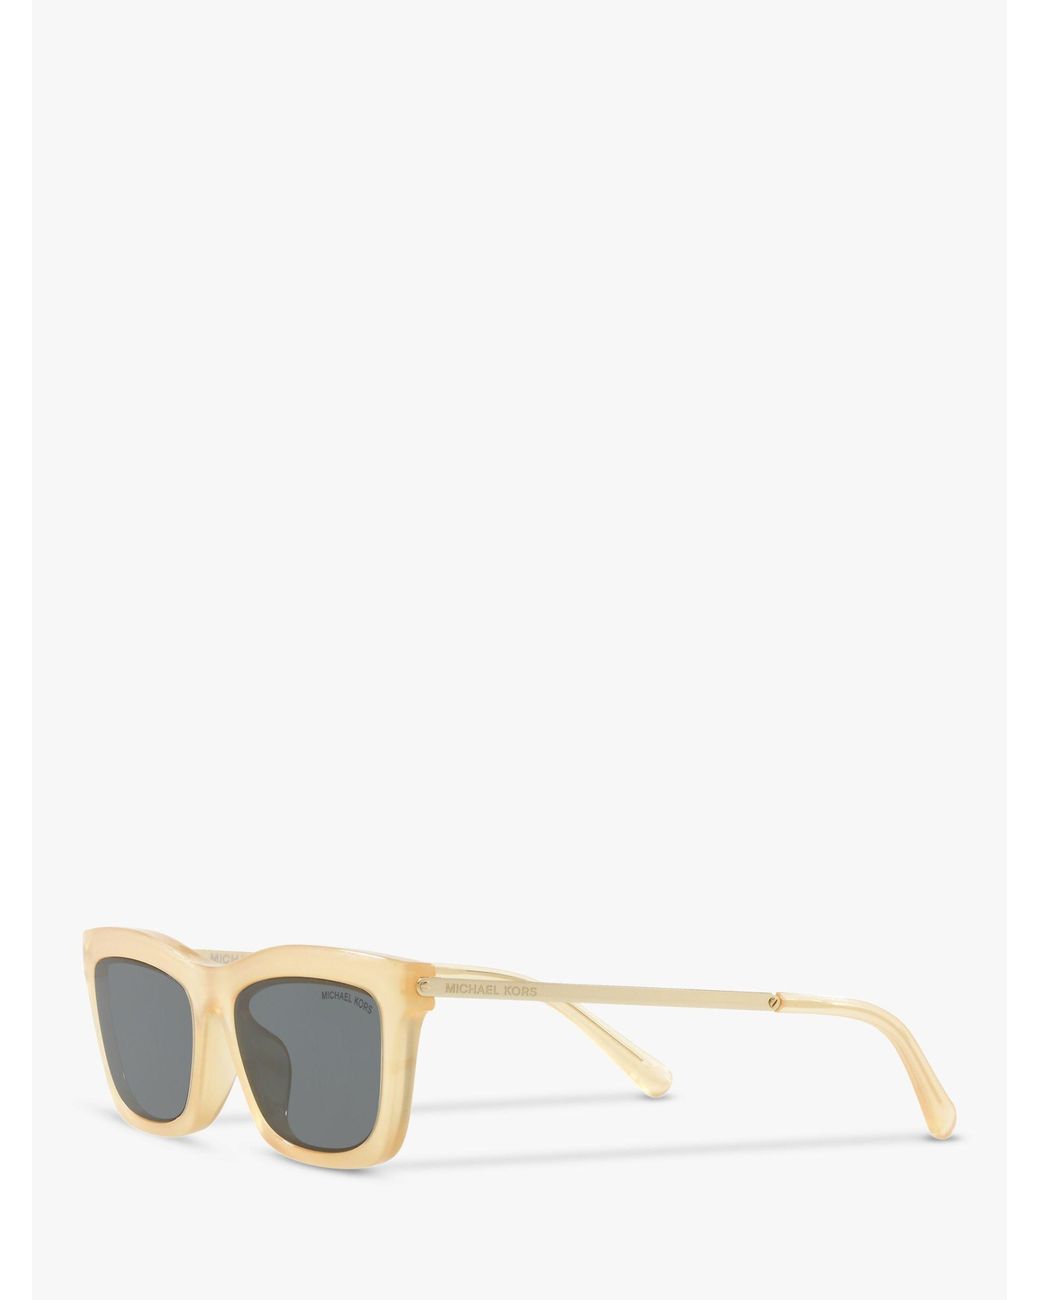 Michael Kors Stowe Mk 2087u women Sunglasses online sale